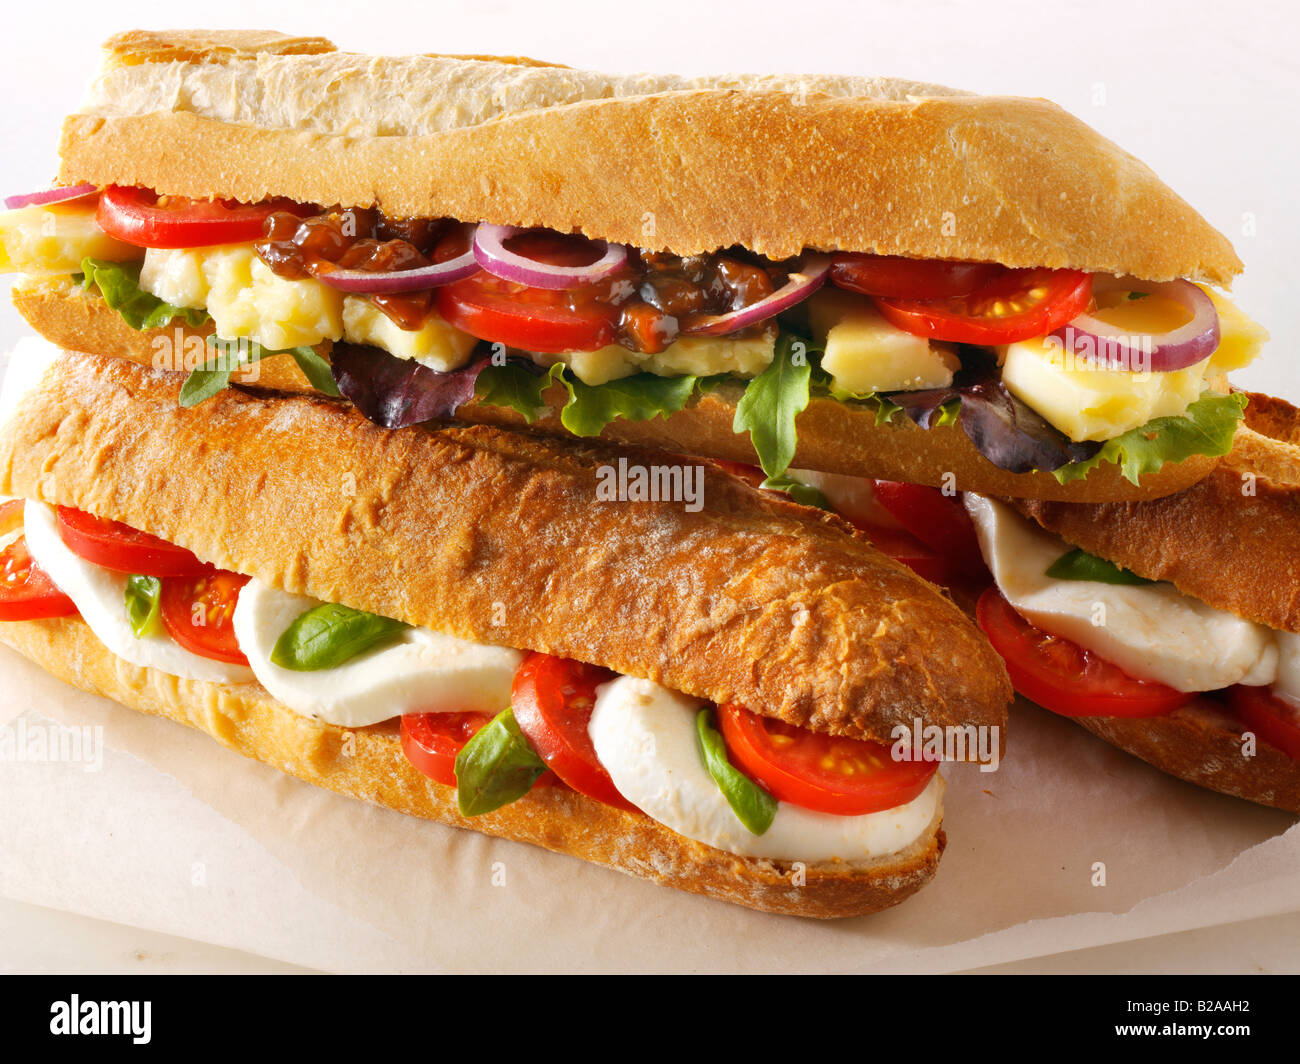 Surtido de sándwiches de baguette contra un fondo blanco, queso y ensalada de tomate y mozzarella, baguette baguette Foto de stock